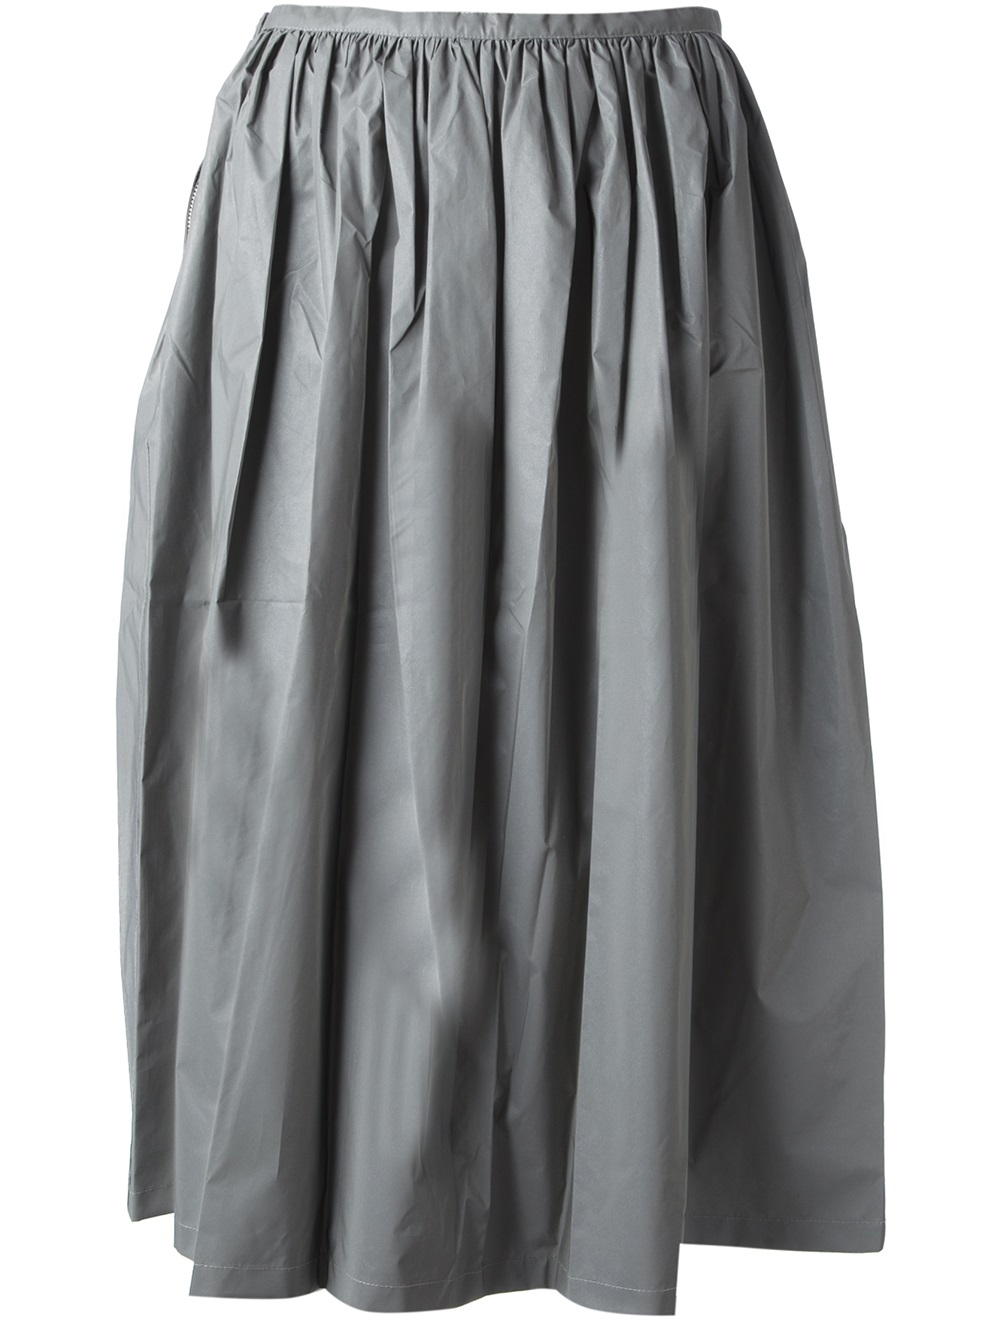 Lyst - Ashish Reflective Gathered Skirt in Gray